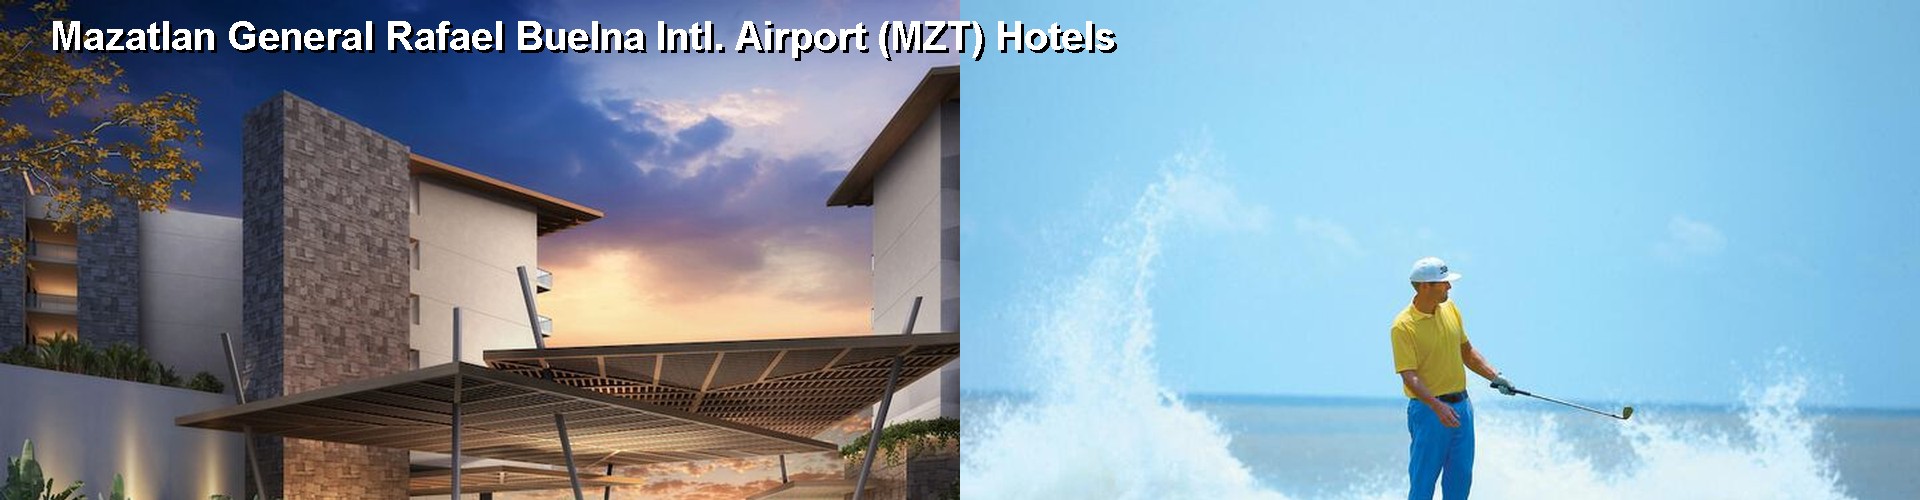 5 Best Hotels near Mazatlan General Rafael Buelna Intl. Airport (MZT)